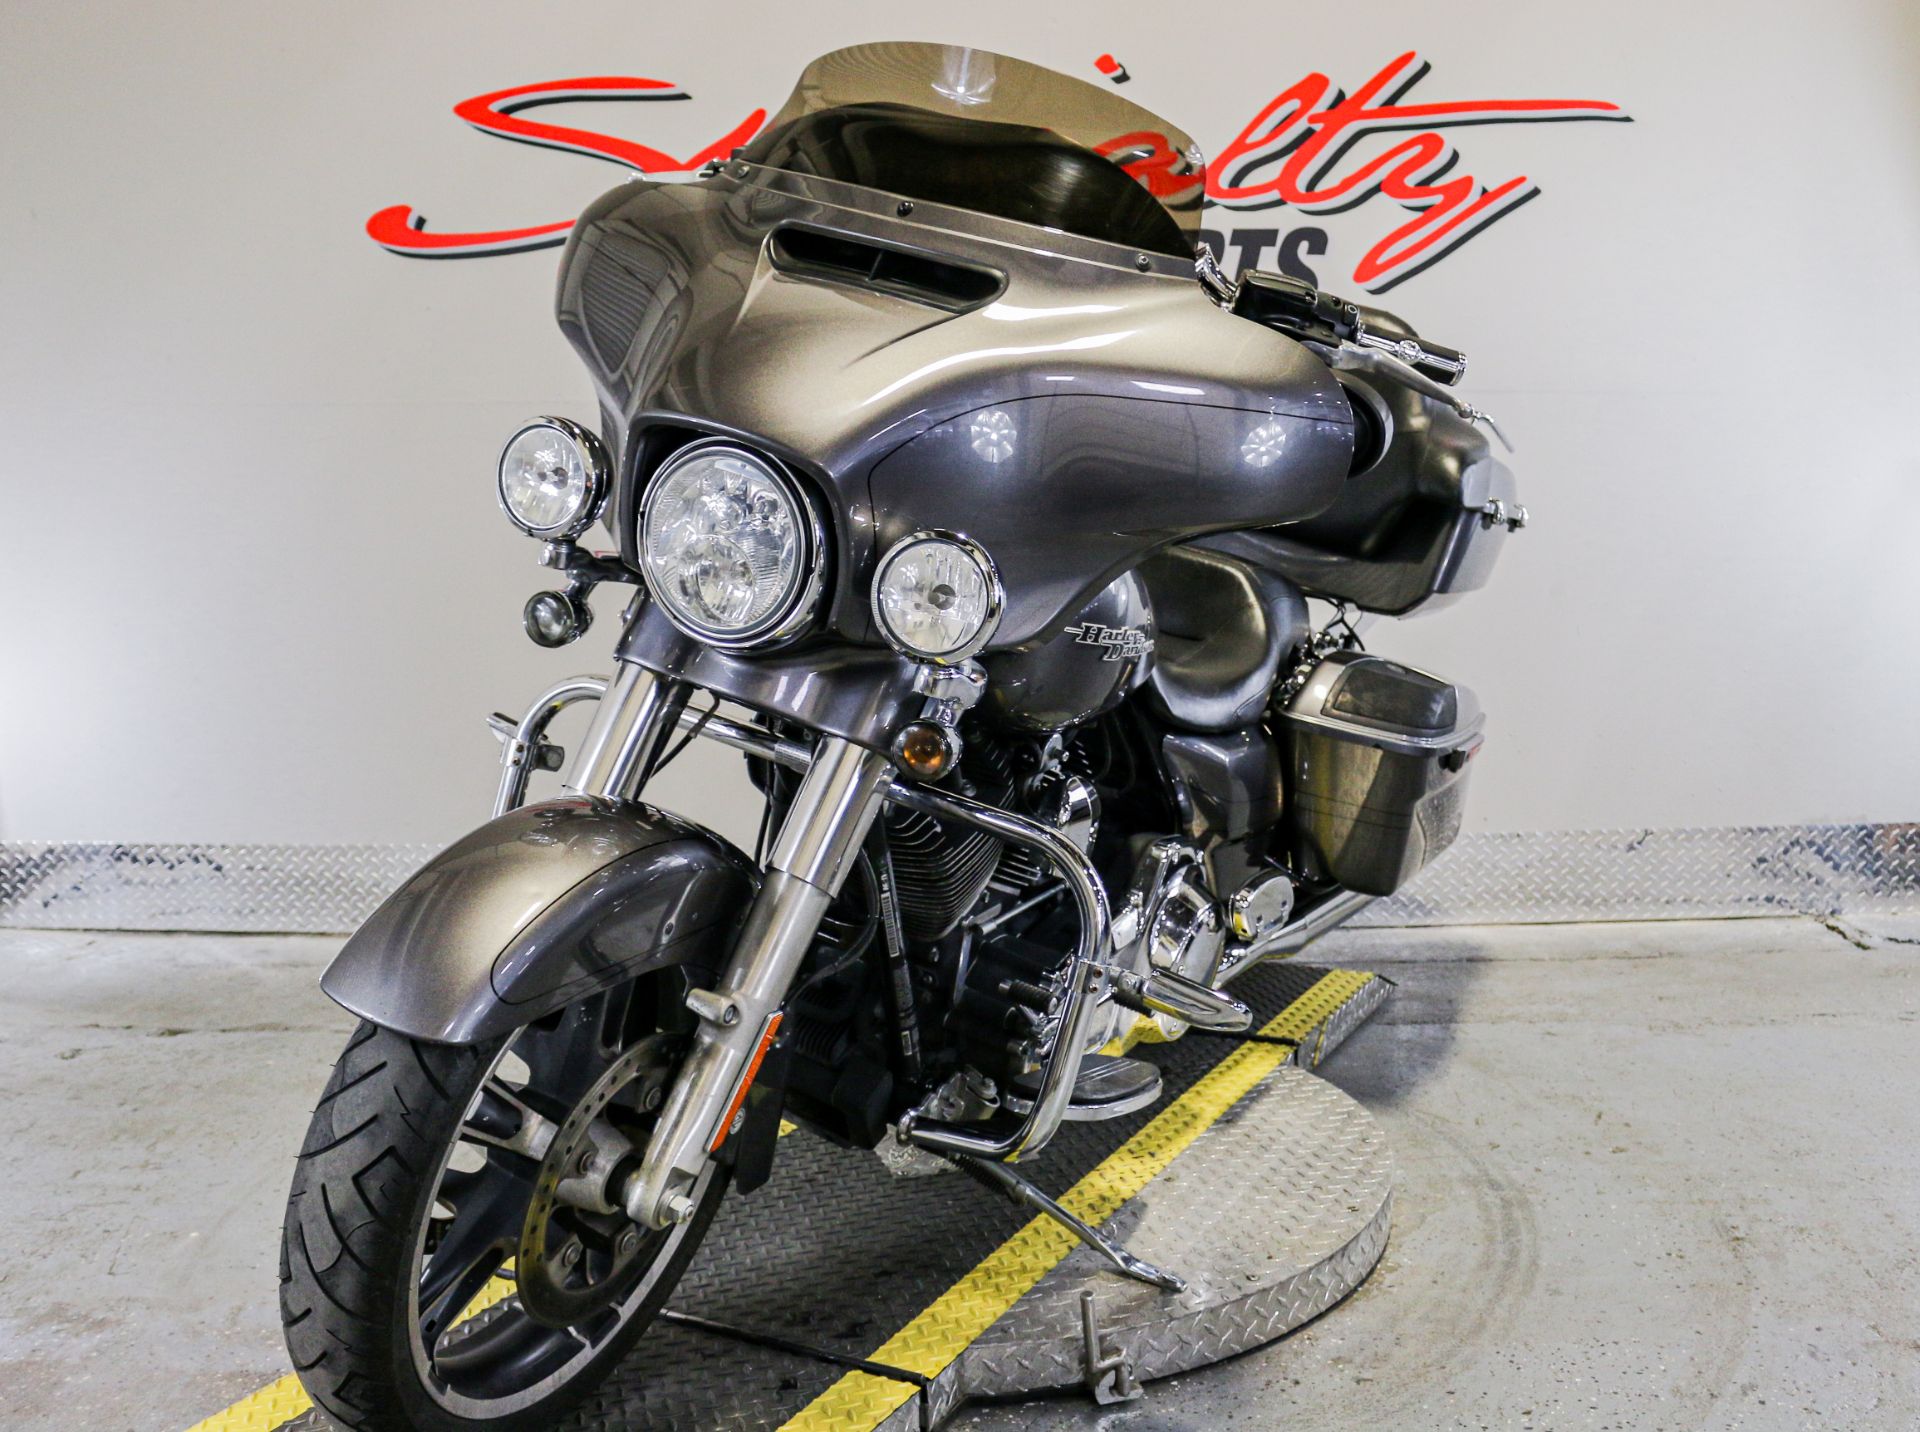 2014 Harley-Davidson Street Glide® Special in Sacramento, California - Photo 5